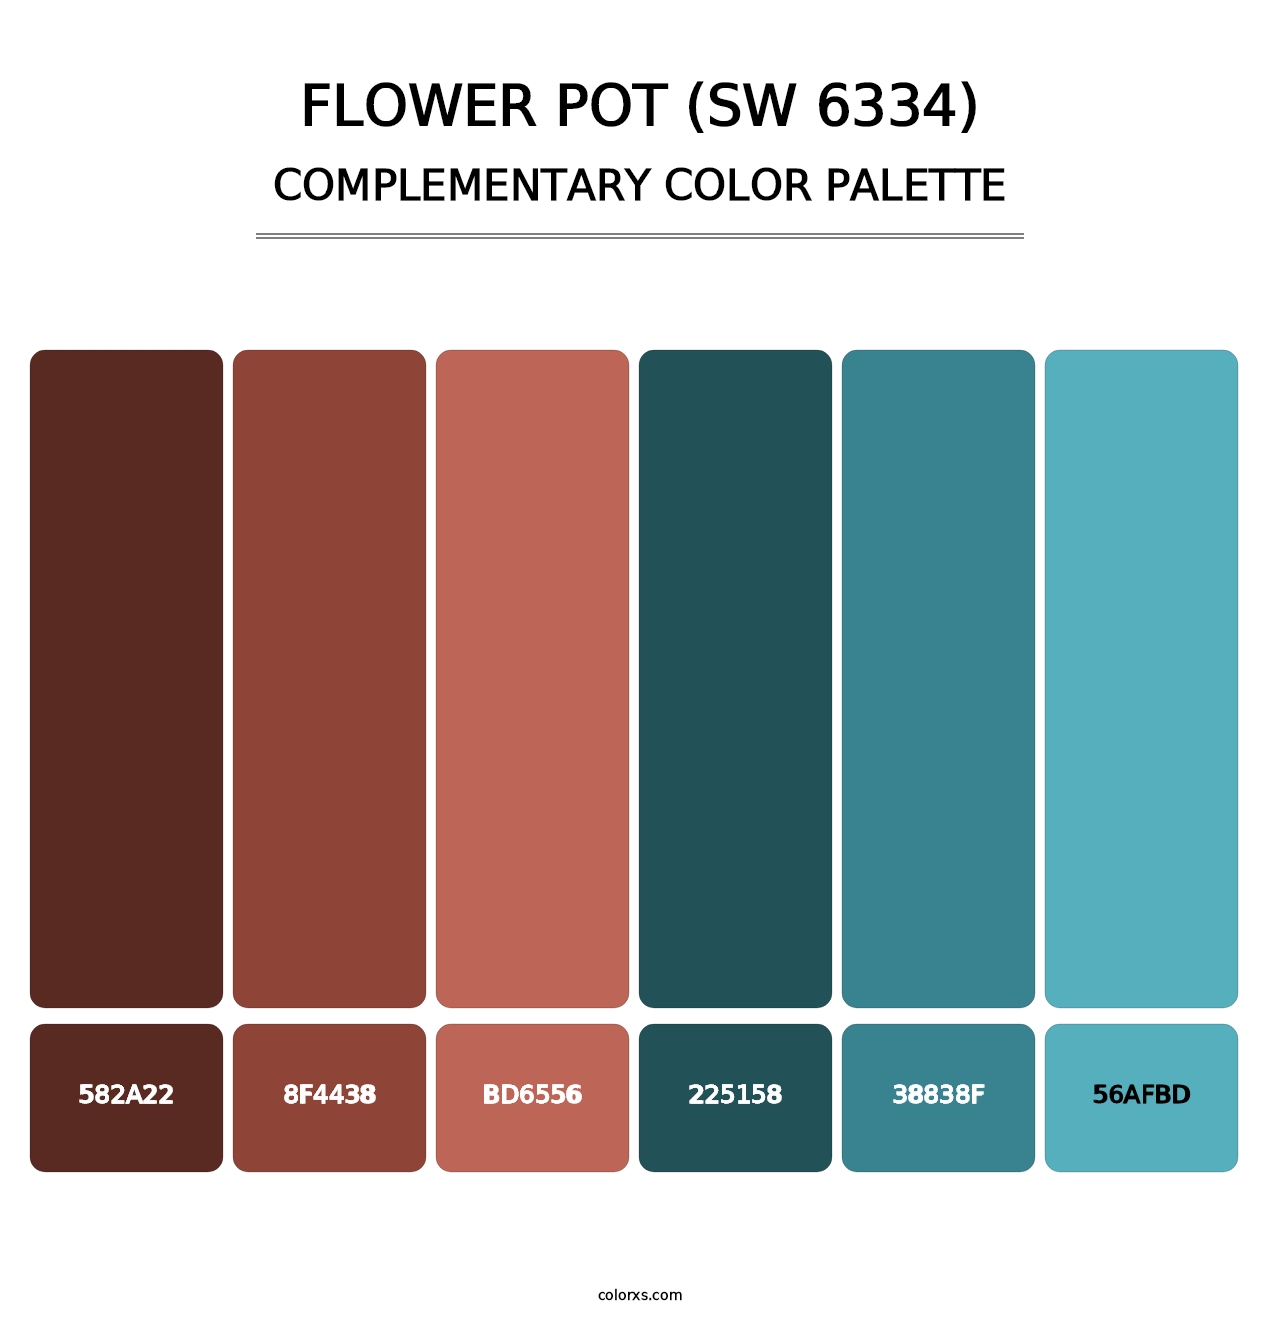 Flower Pot (SW 6334) - Complementary Color Palette